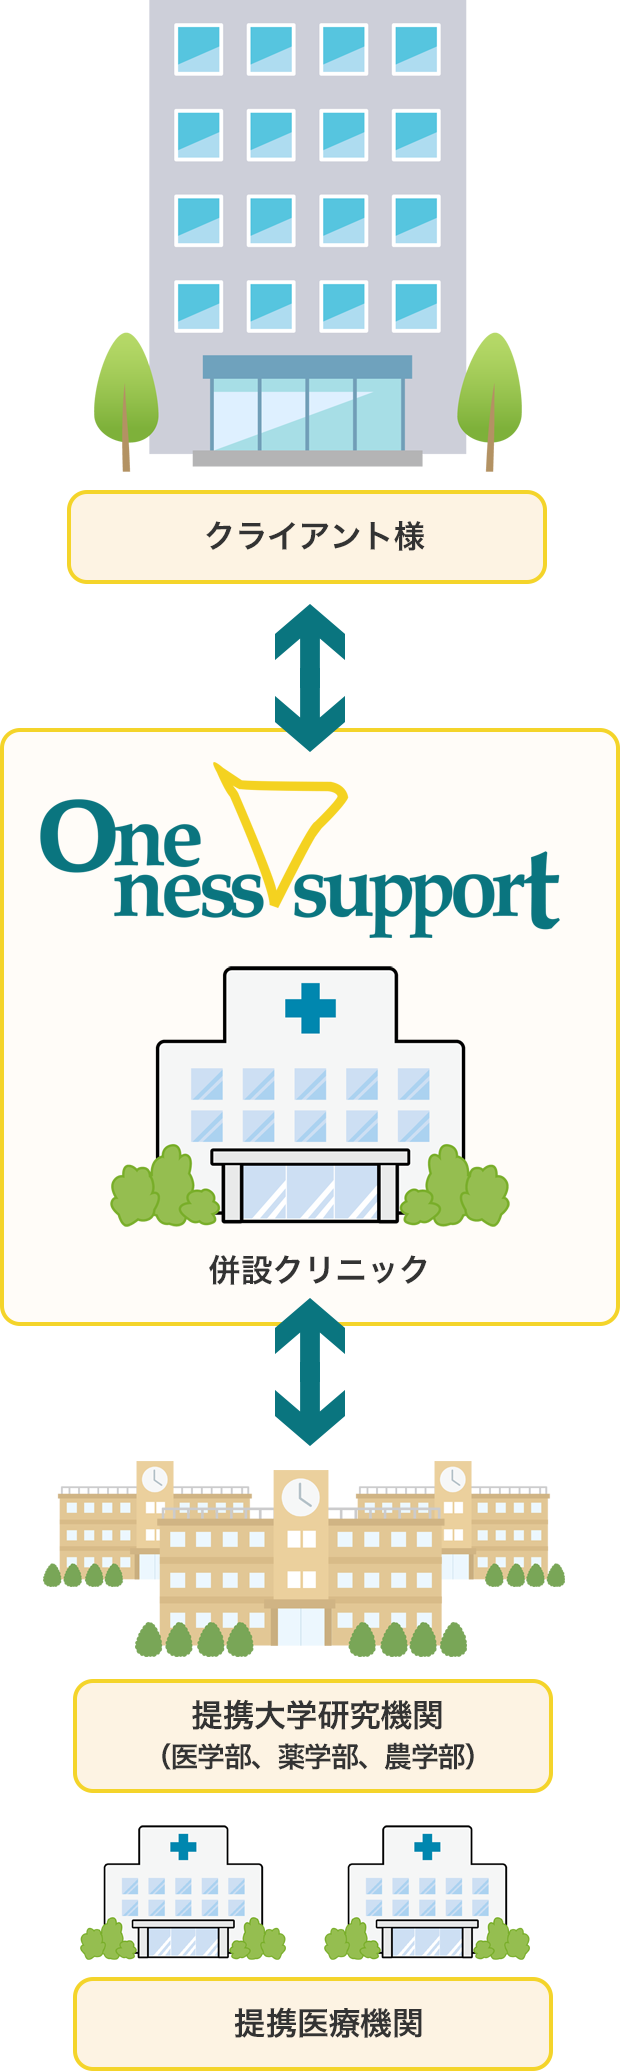 Oneness support の特徴の画像